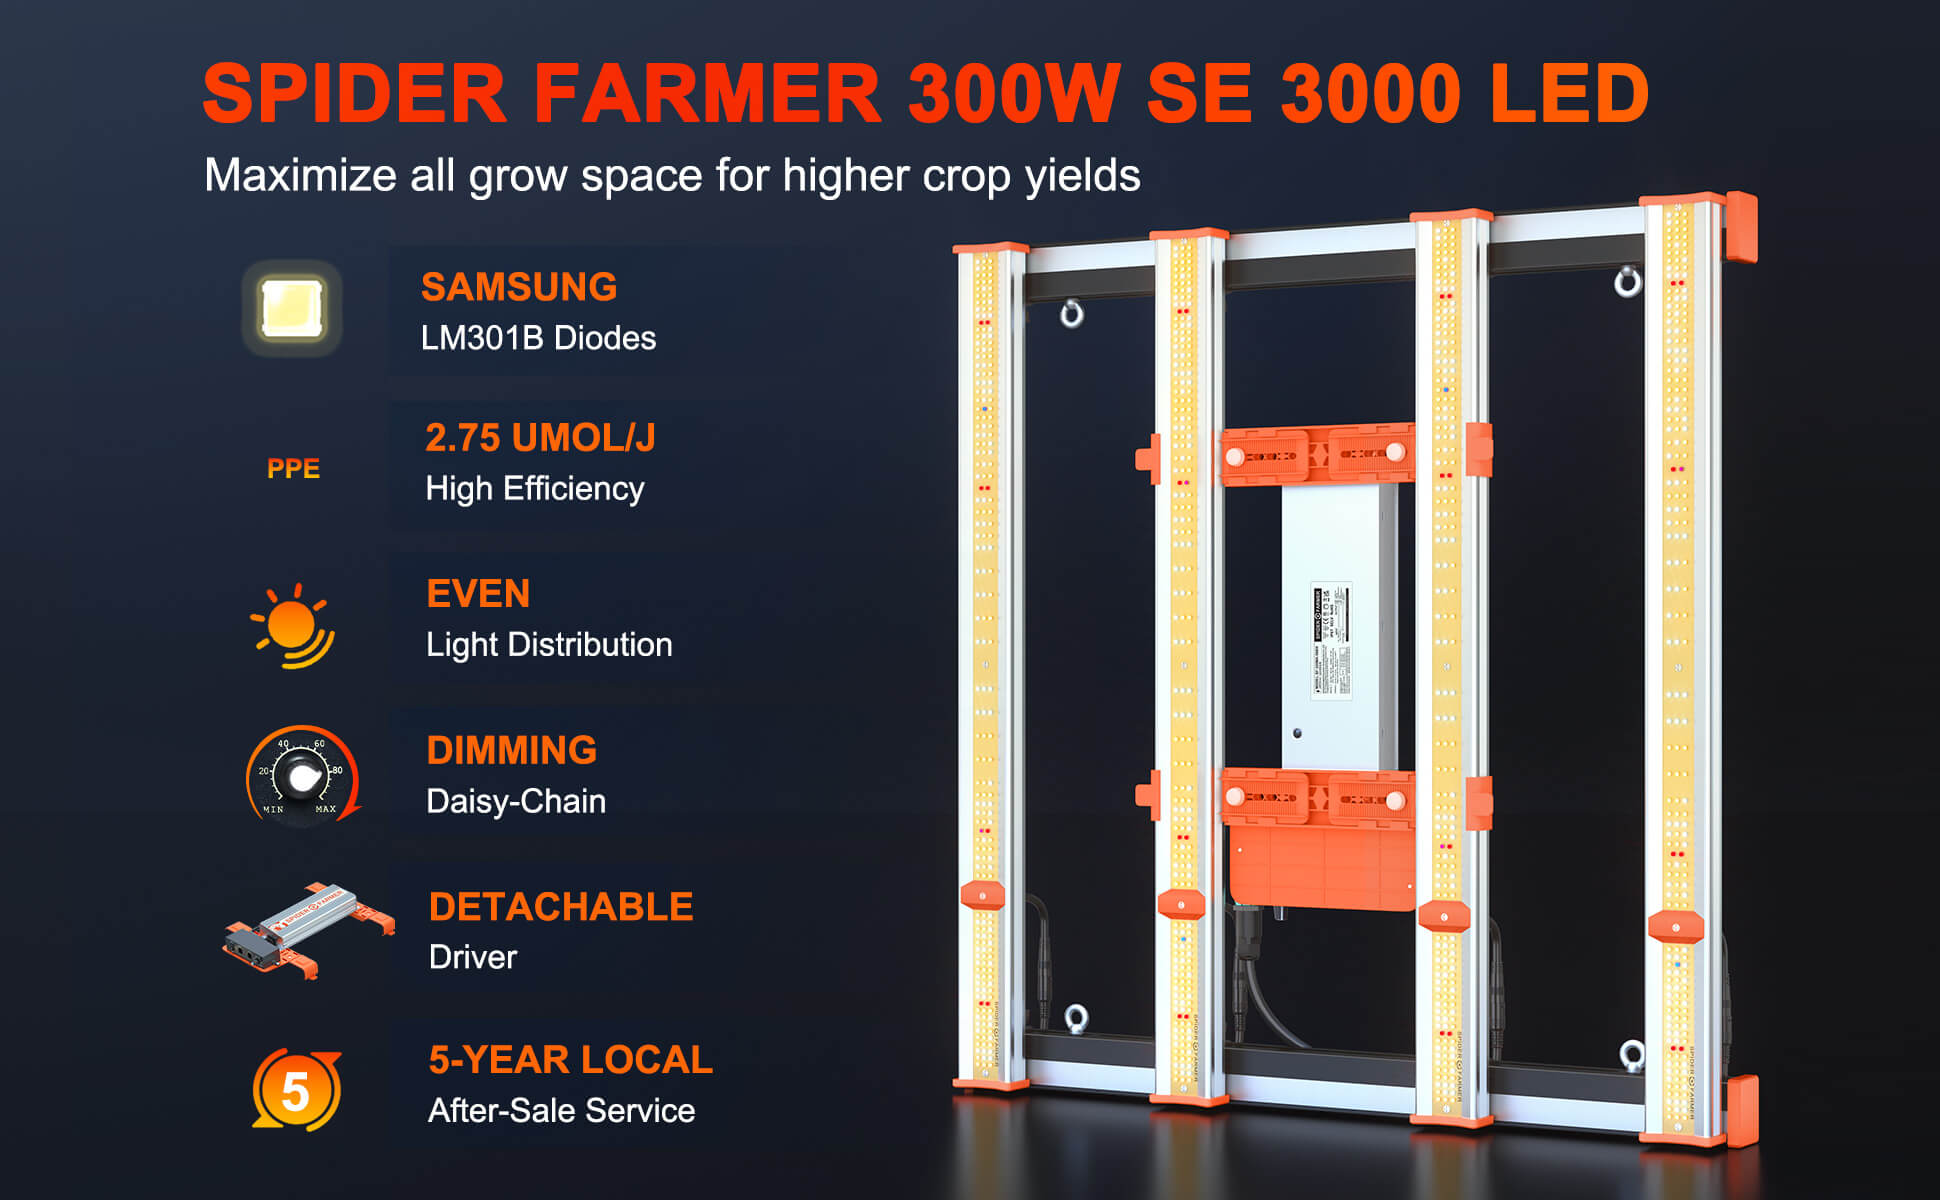 Spider Farmer SE3000 300W Led grow light